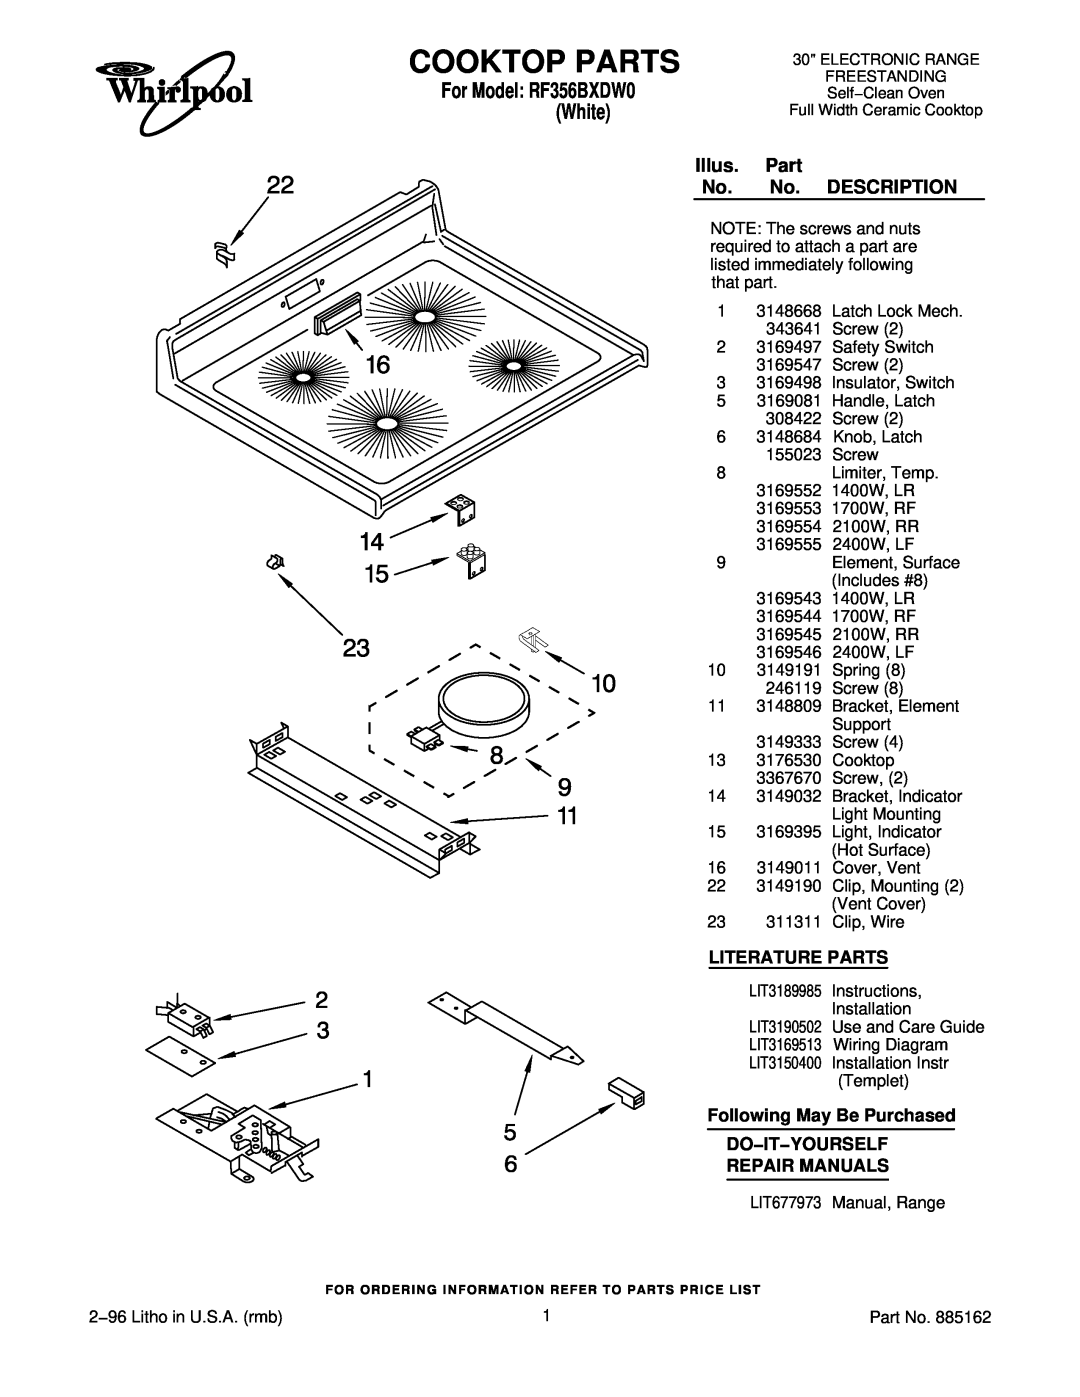 Whirlpool RF356BXDW0 manual Cooktop Parts, Illus. Part No. No. DESCRIPTION, Literature Parts 